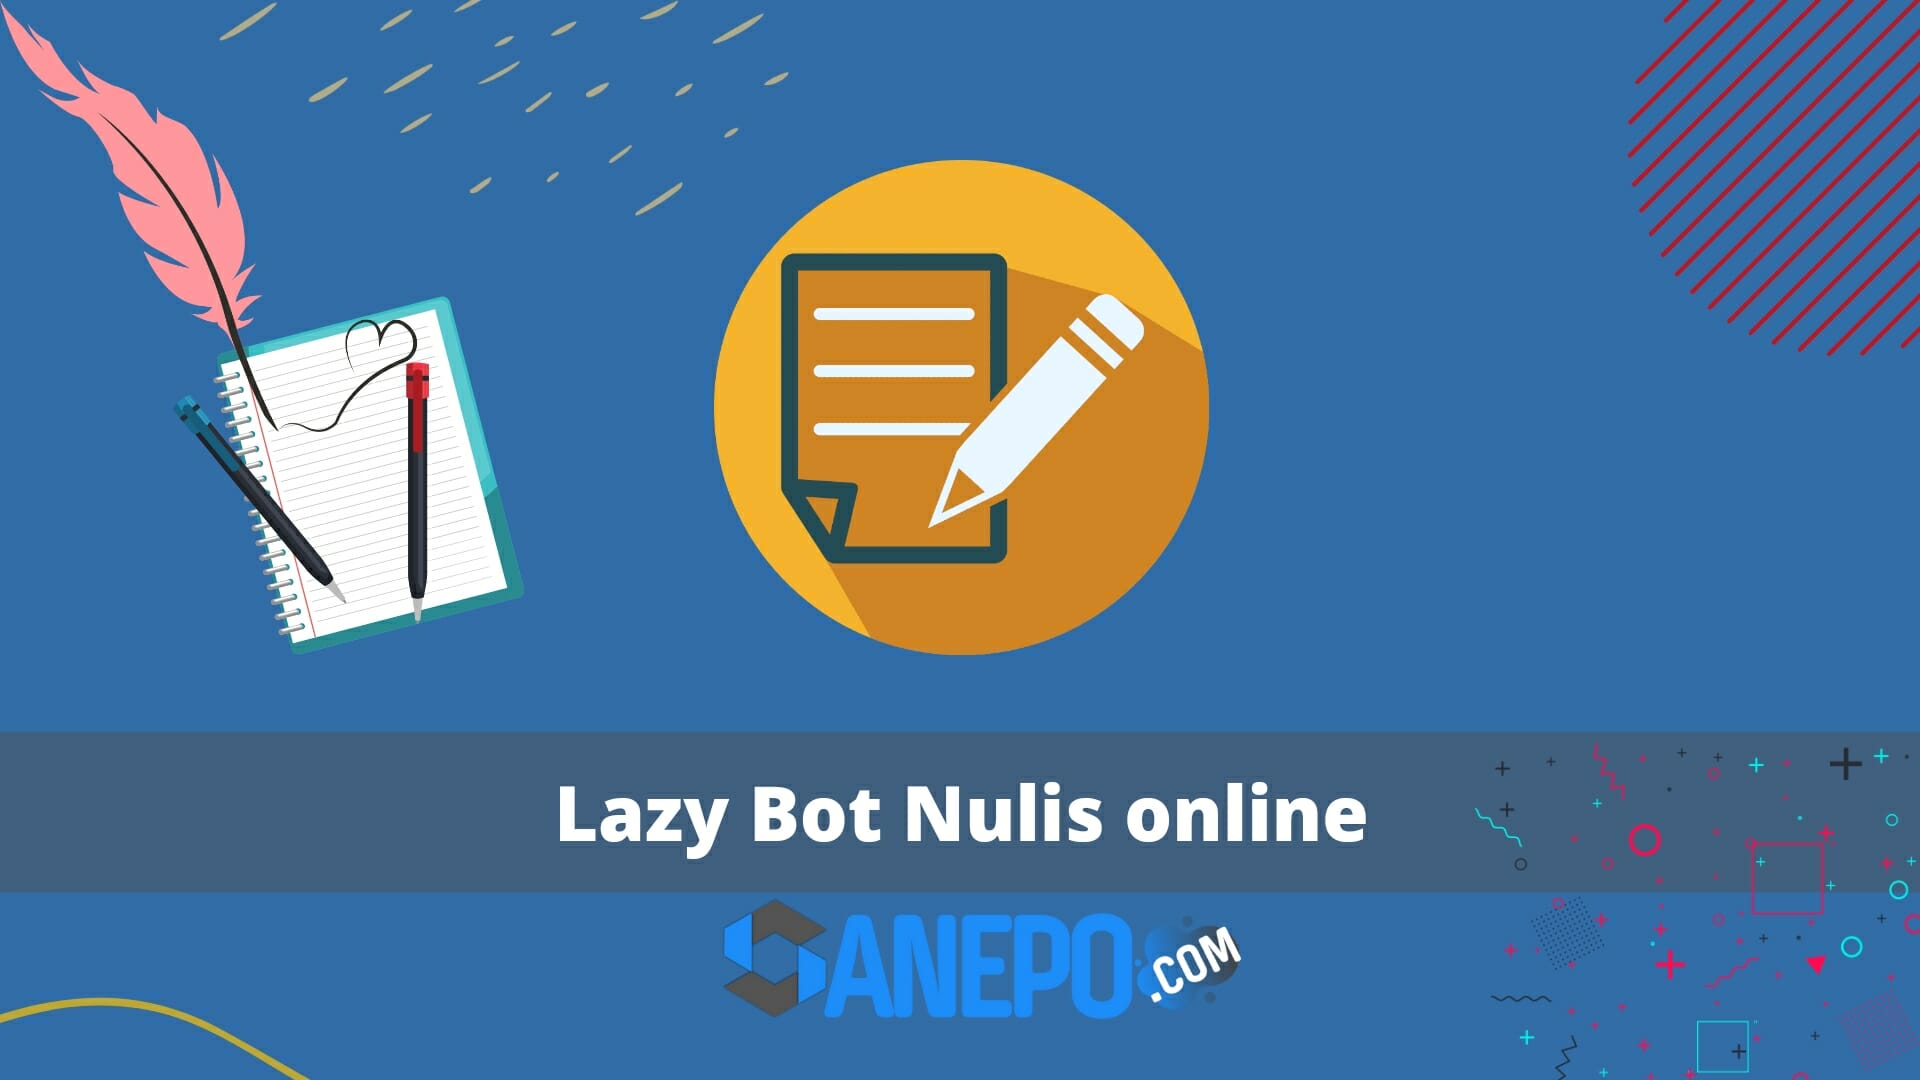 Lazy Bot Nulis online